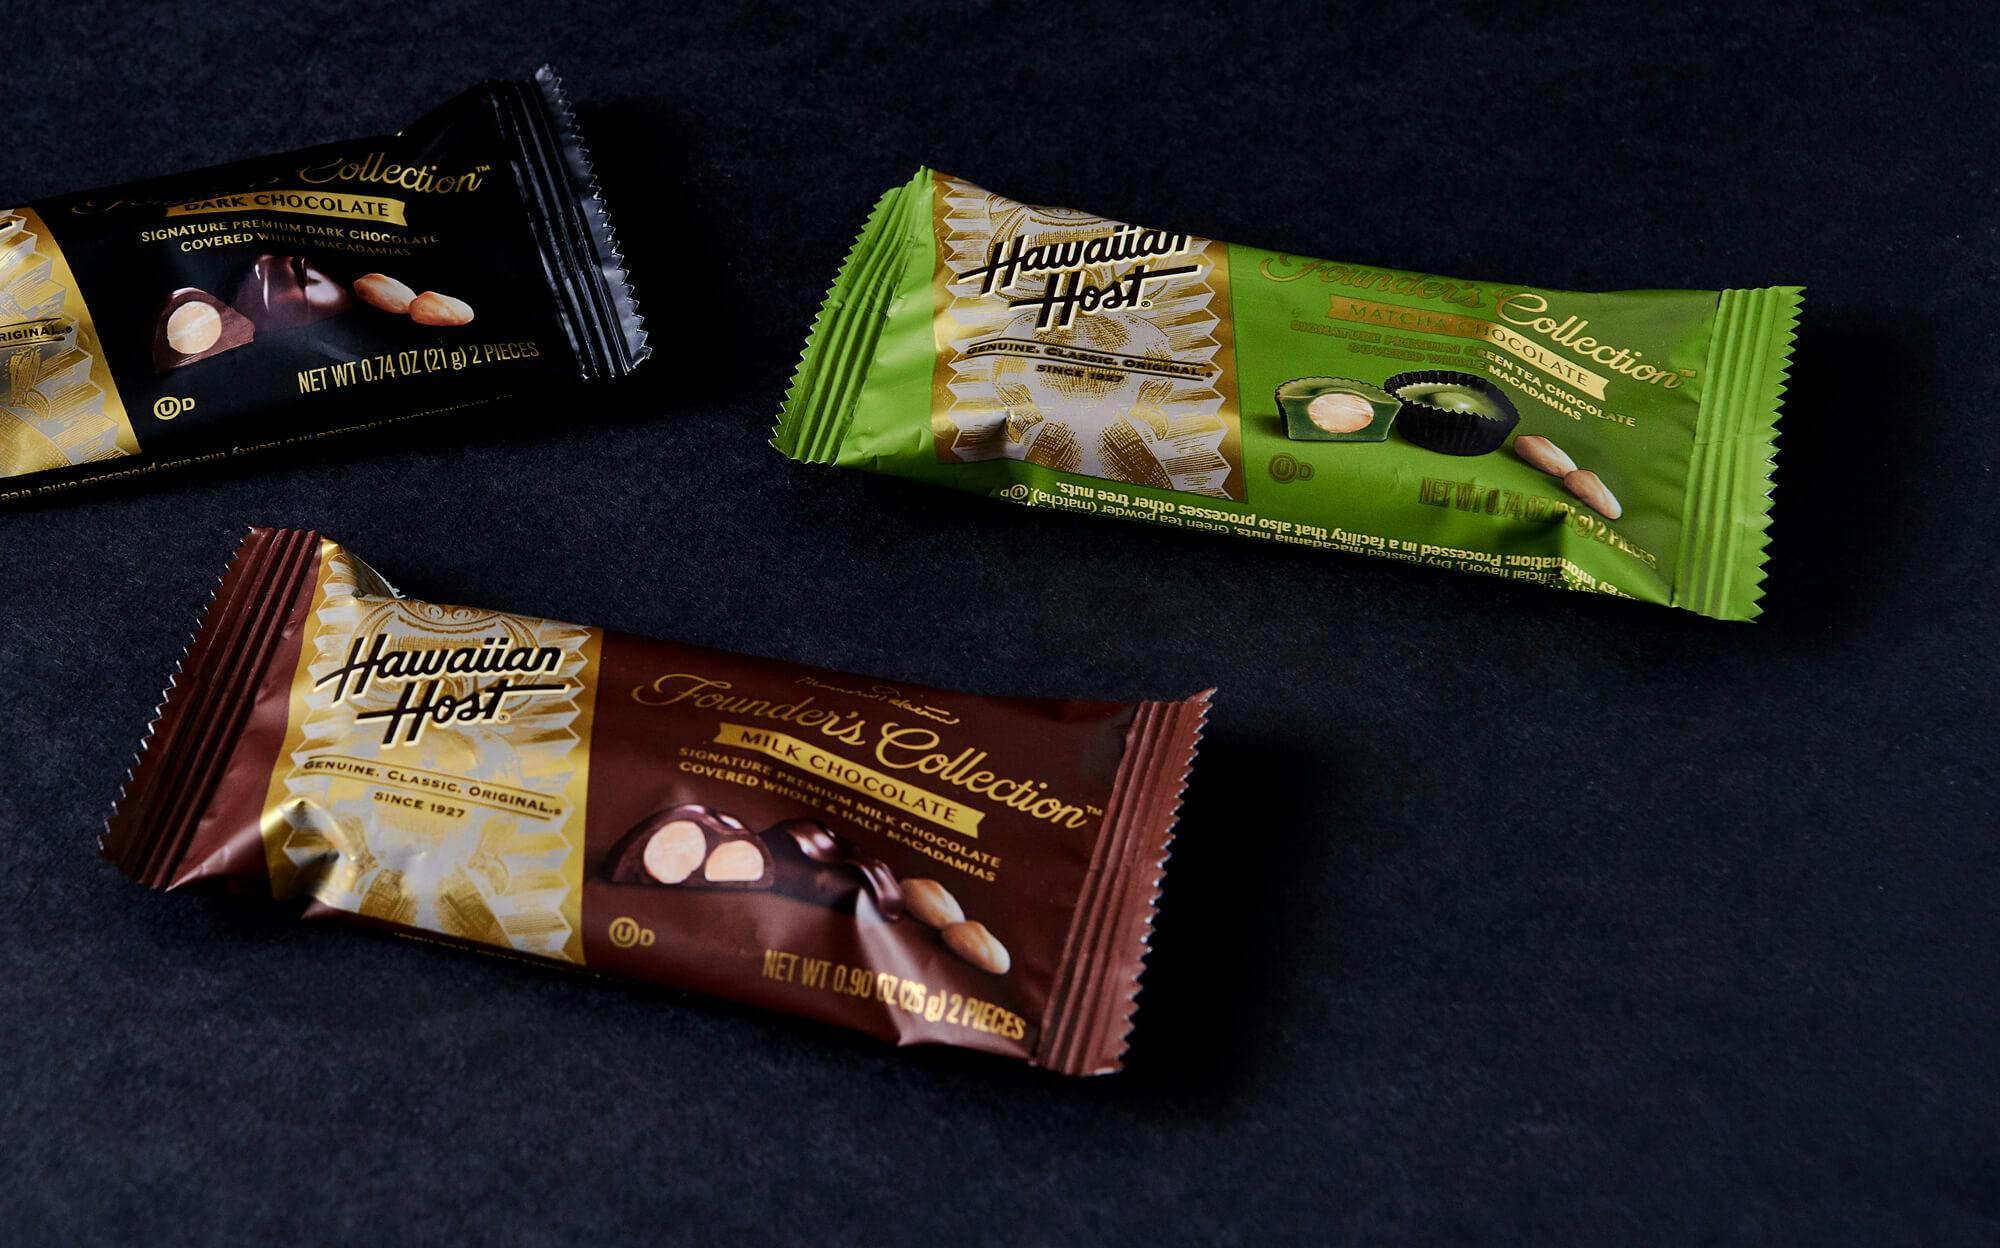 Individually wrapped chocolate macadamia nuts of the dark chocolate flavor, milk chocolate flavor, and matcha flavor.